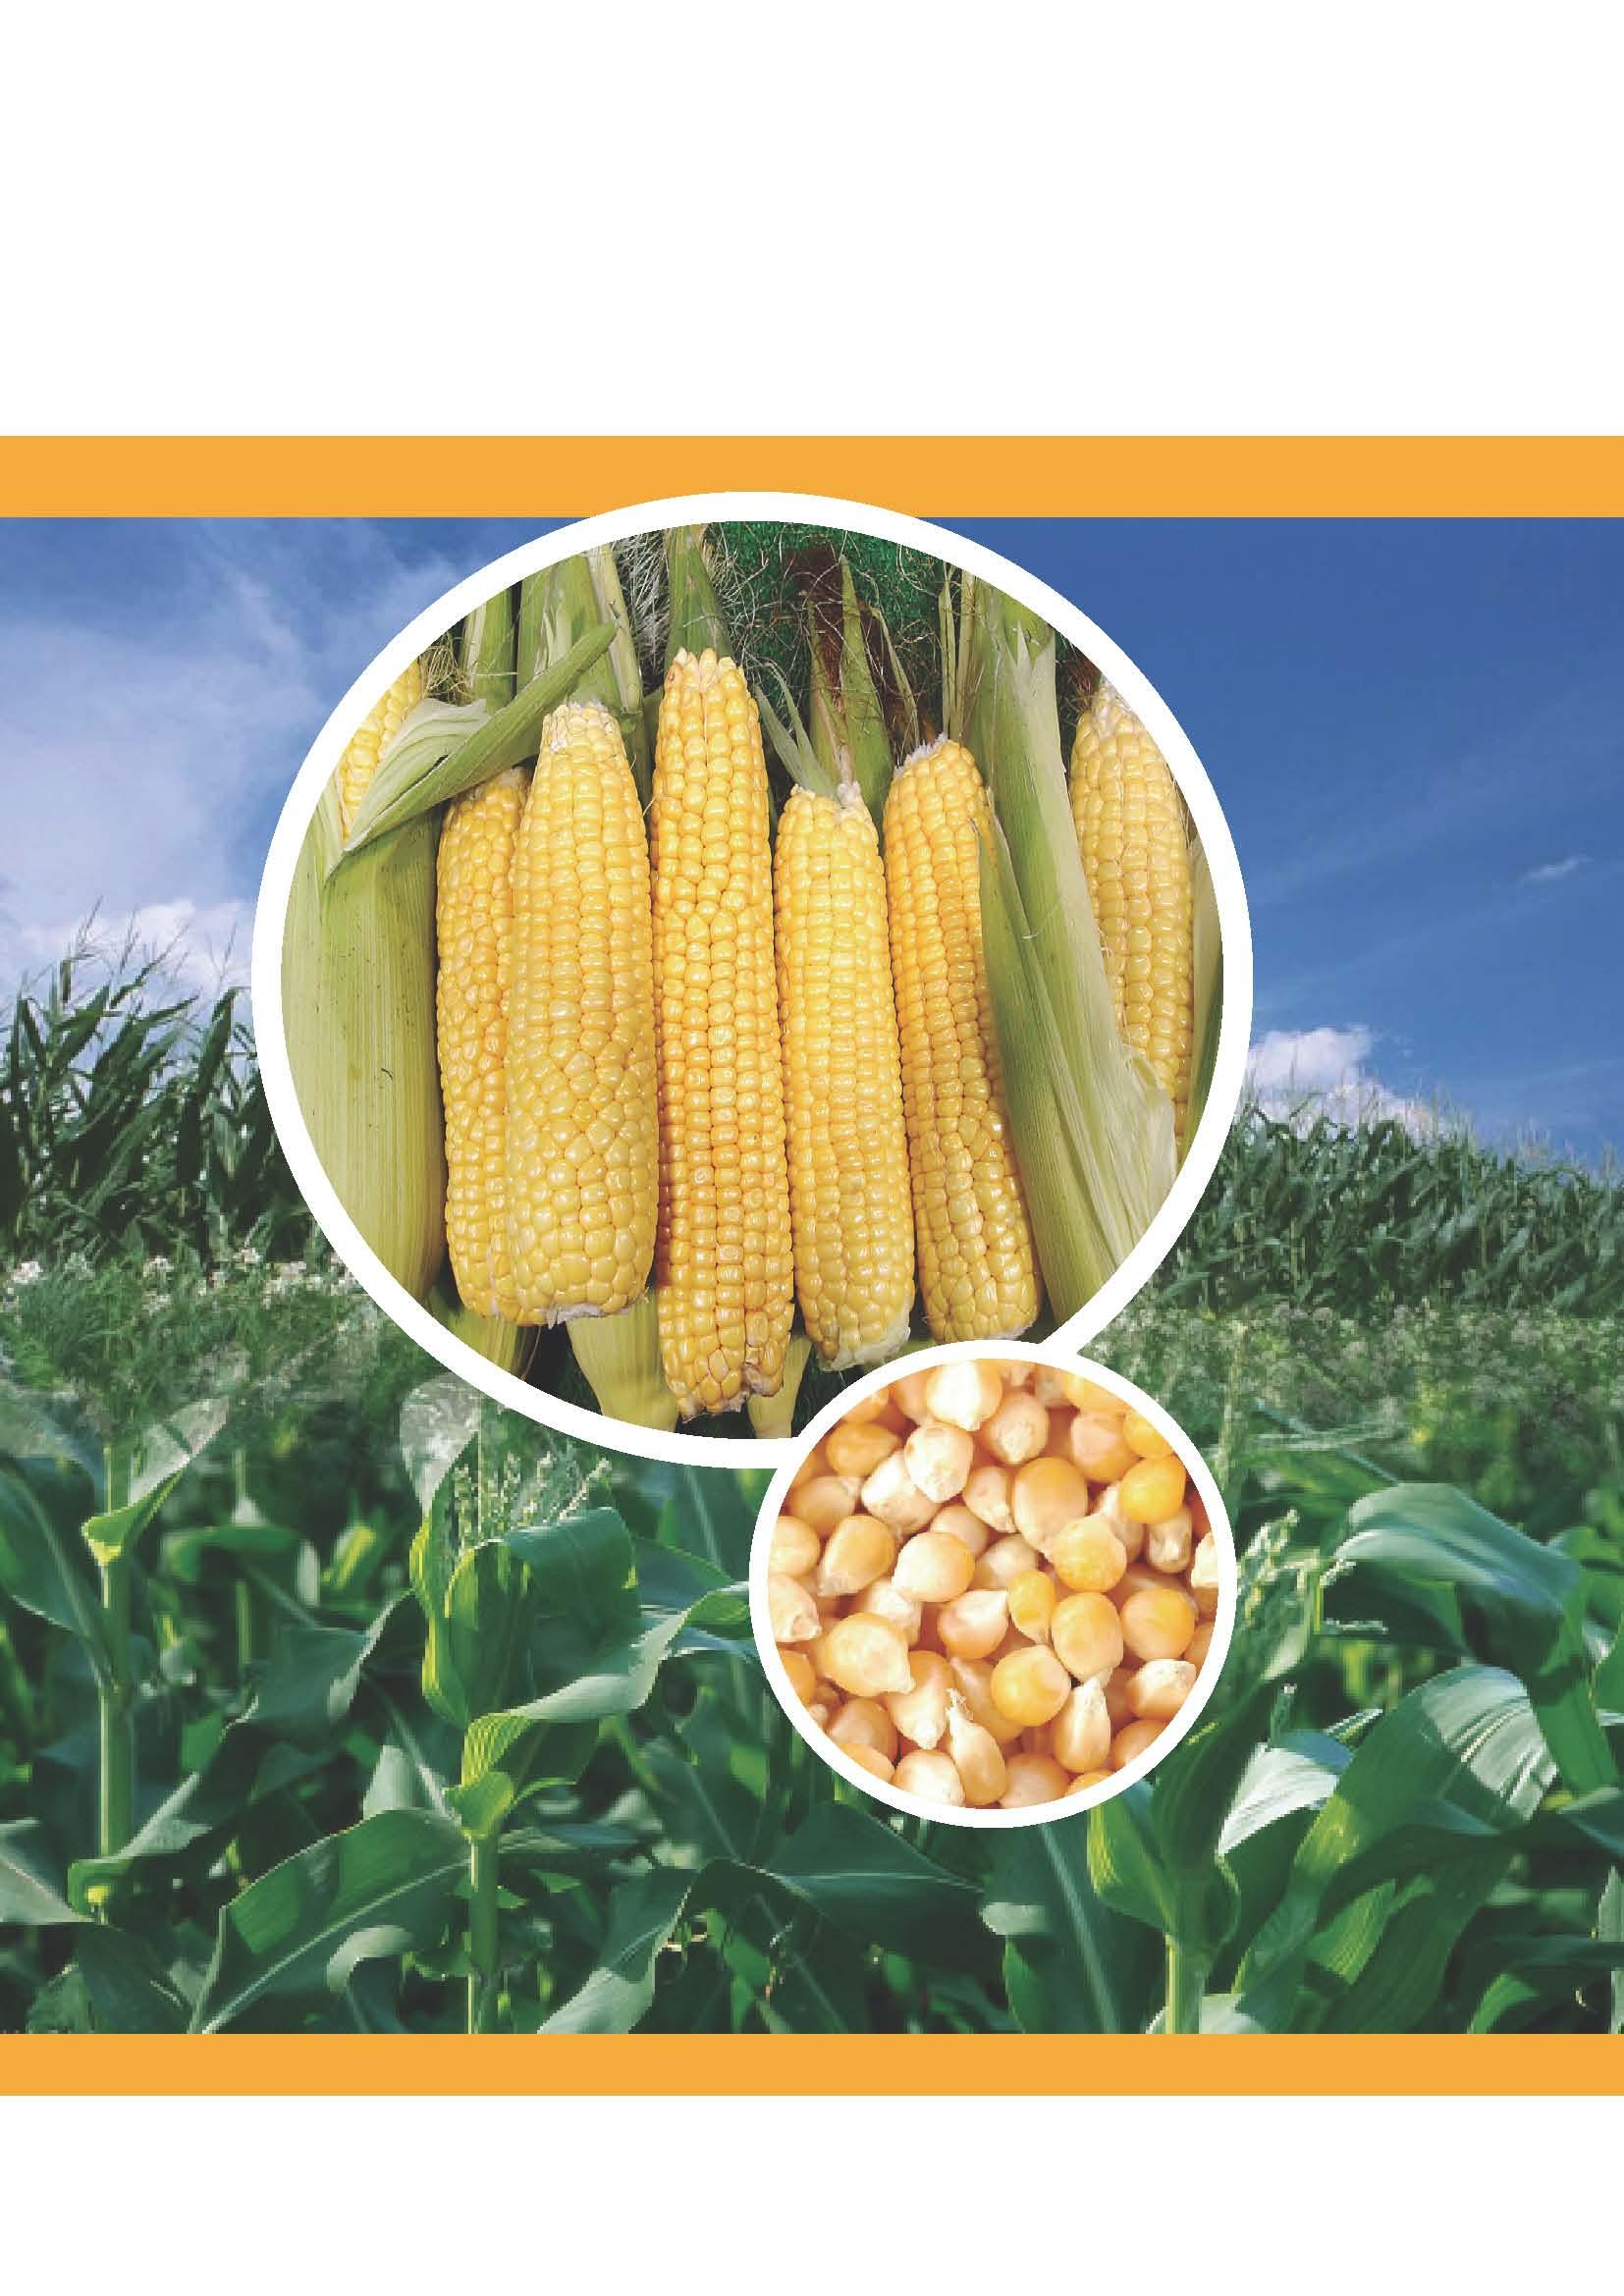 Corn Products China News (Chinese version)